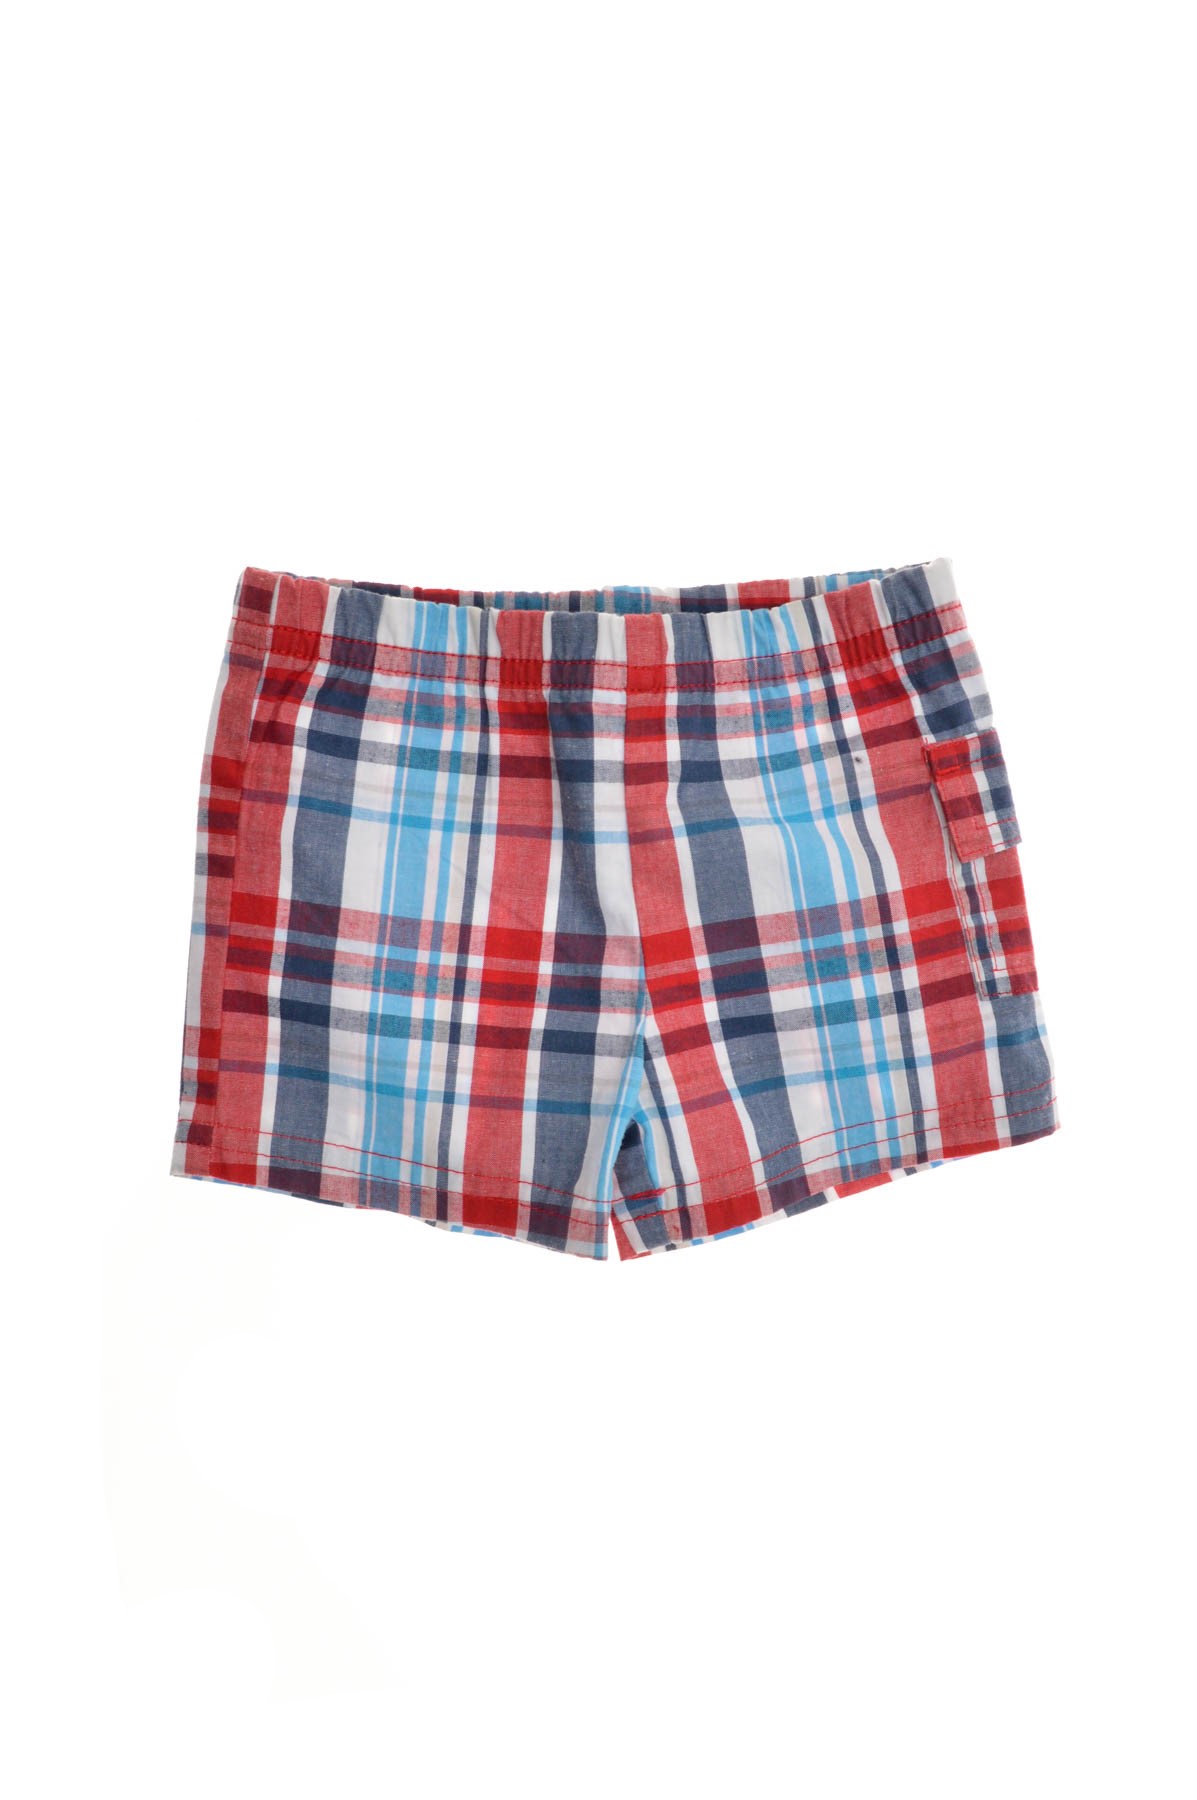 Baby boy's shorts - Garanimals - 0